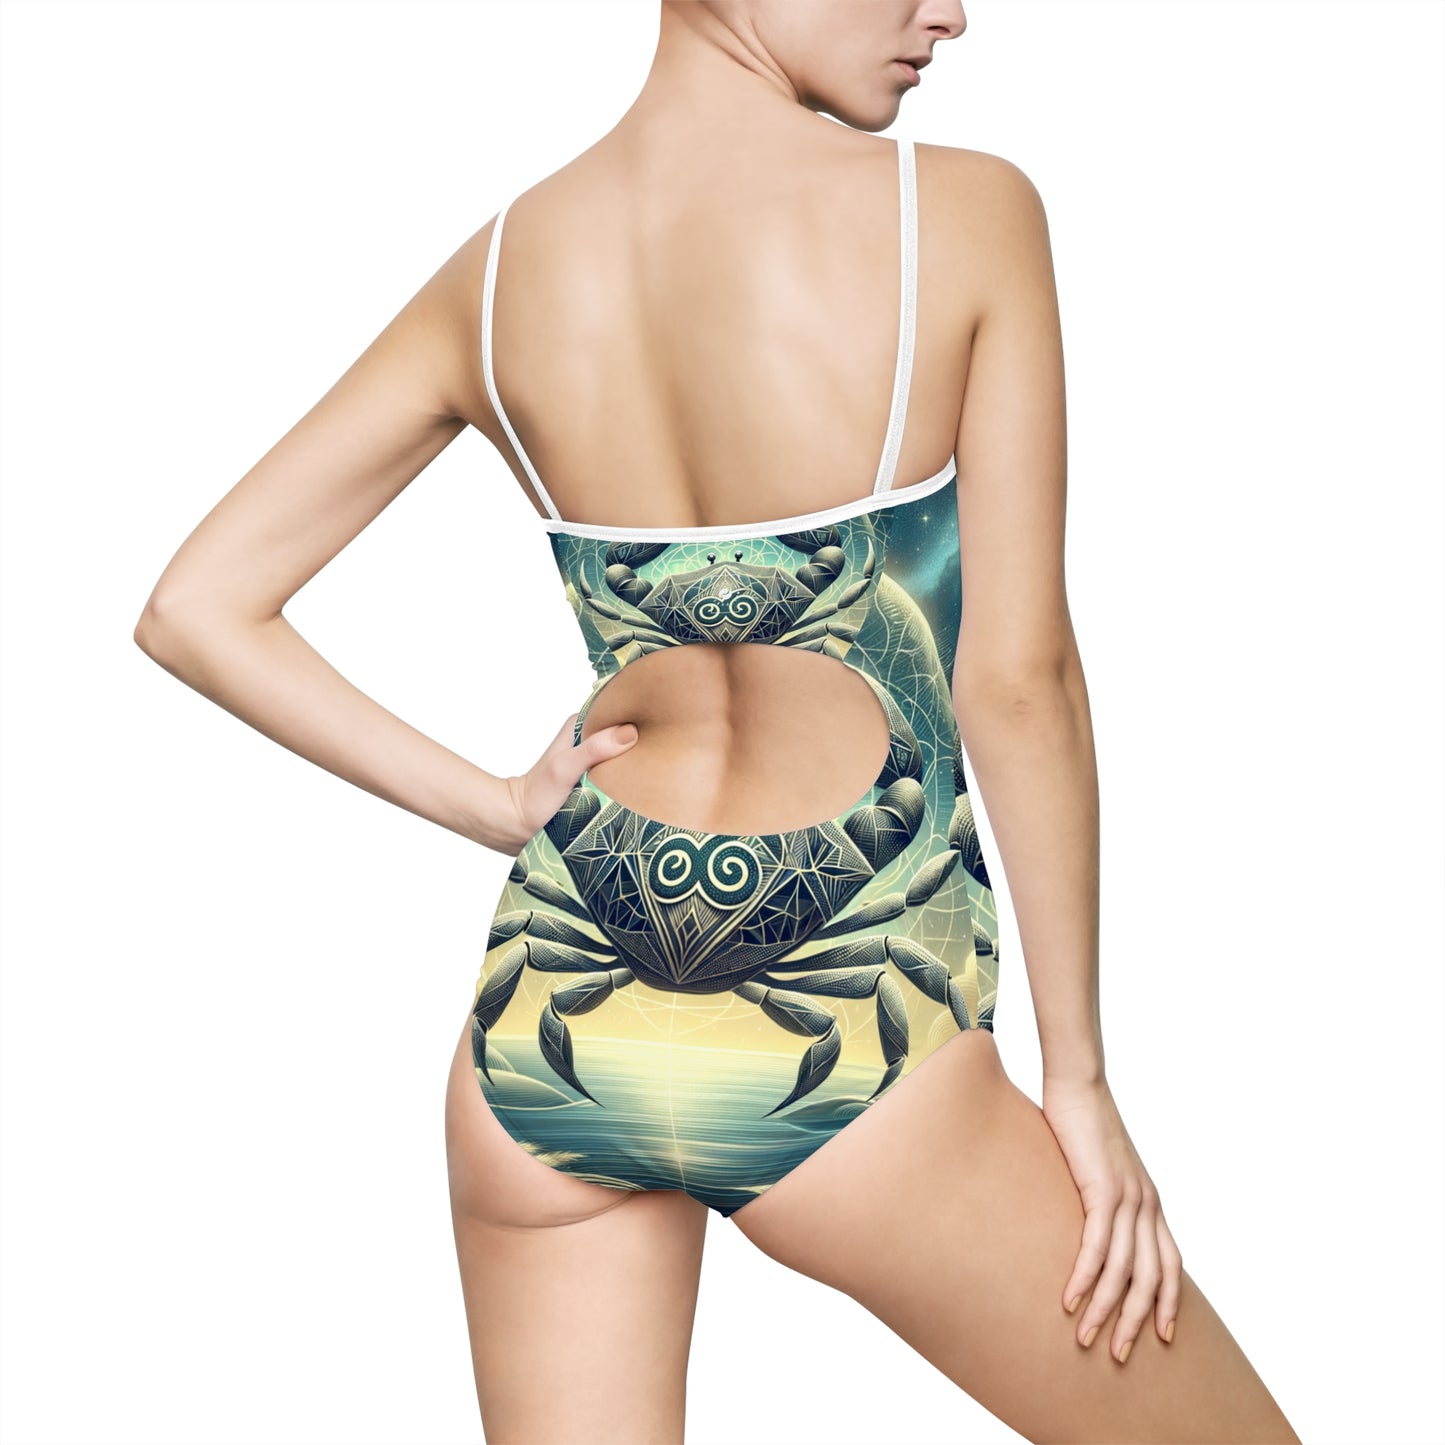 Crab Constellation Yoga - Openback Swimsuit